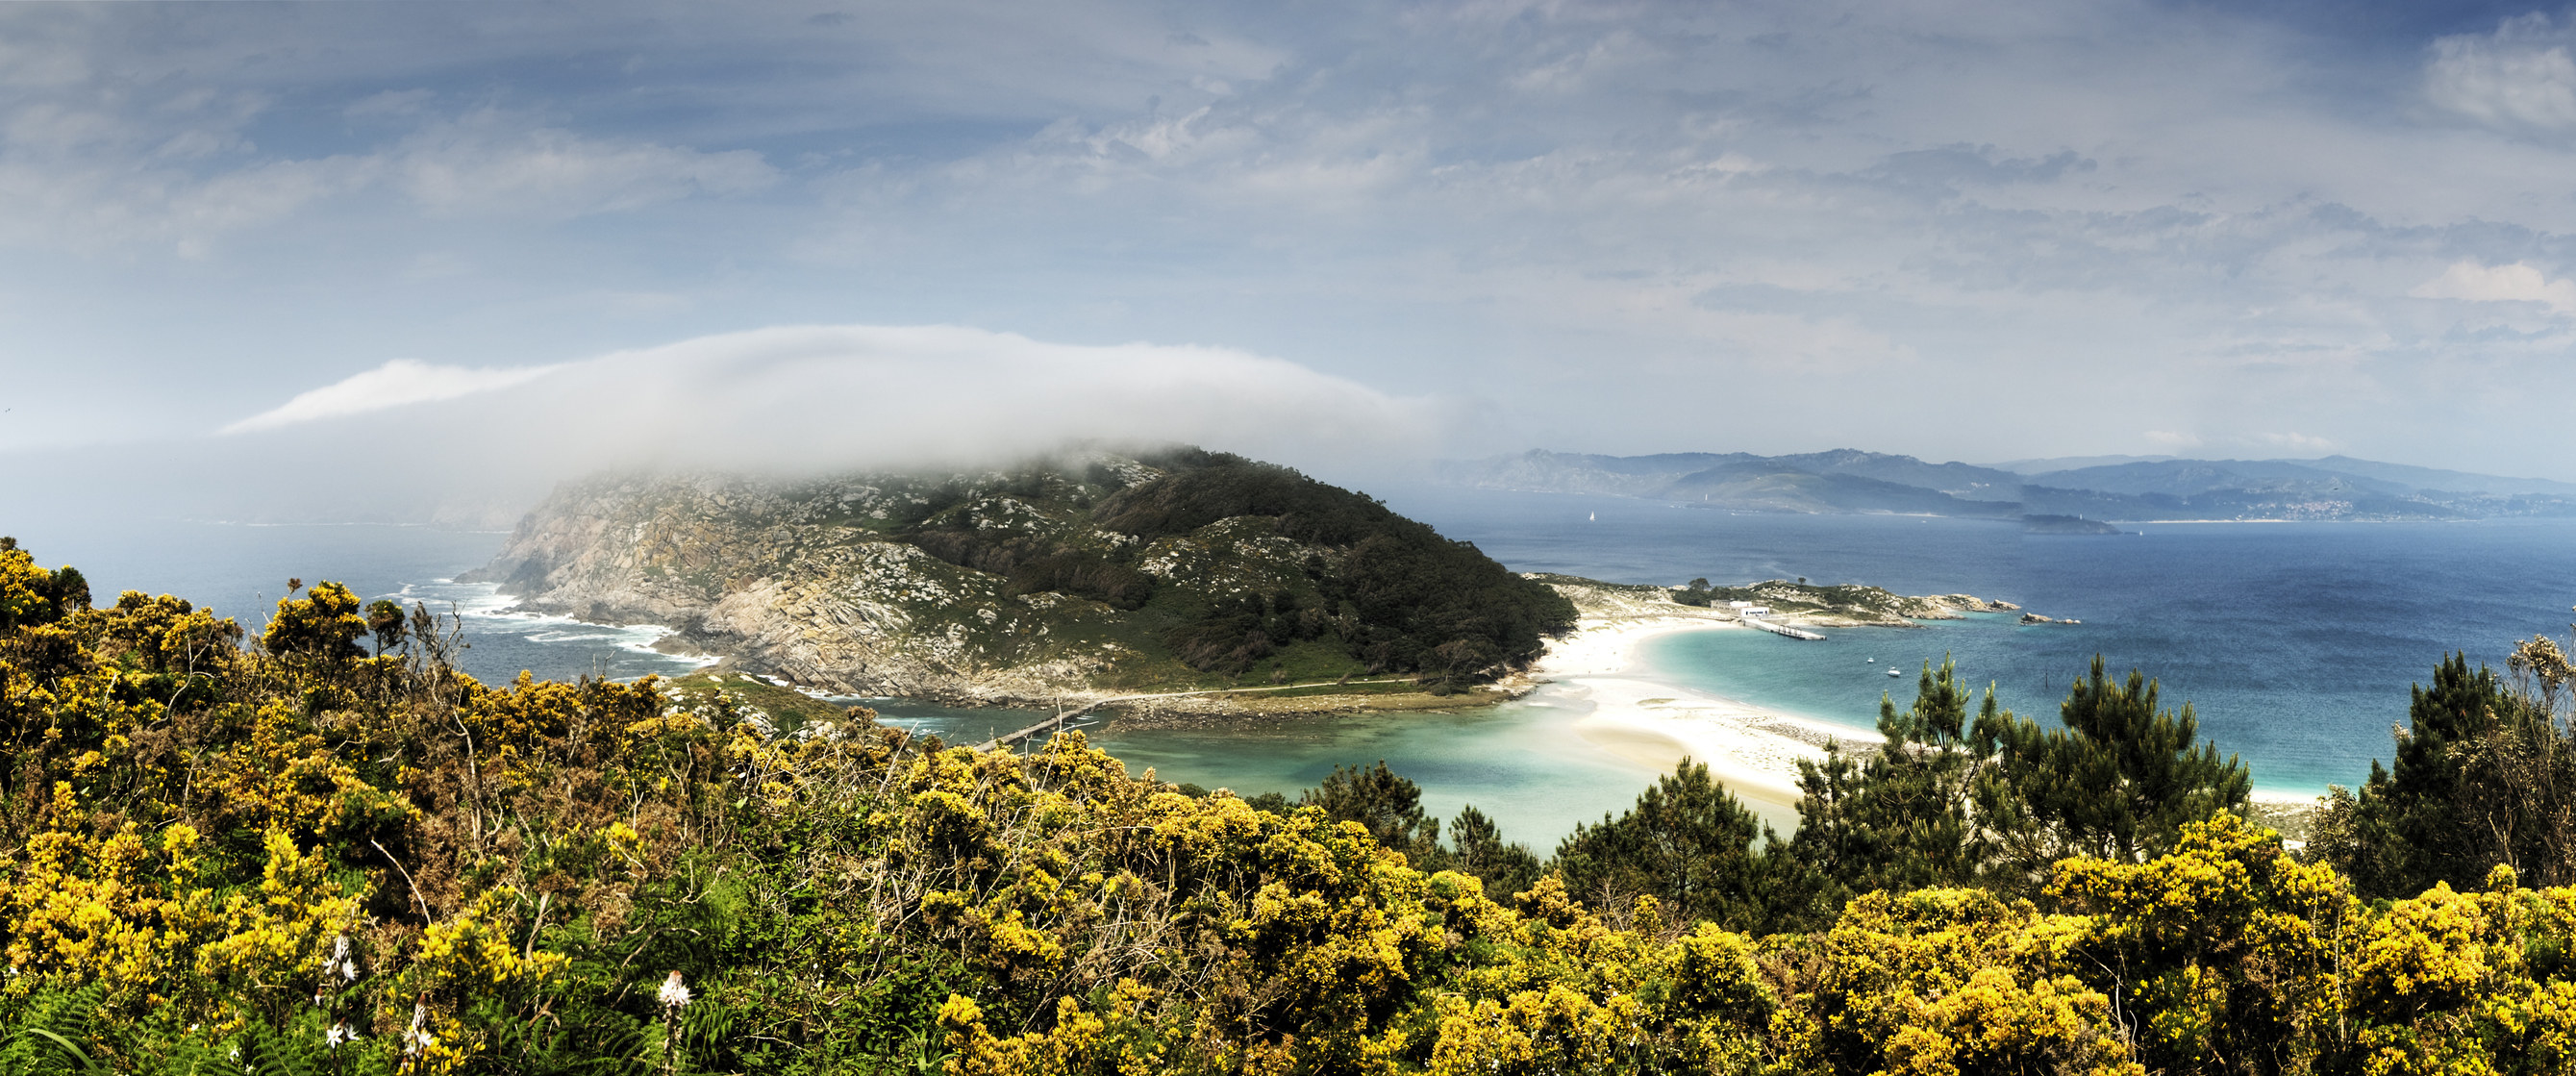 Cies Islands off the coast of Galicia, Spain.